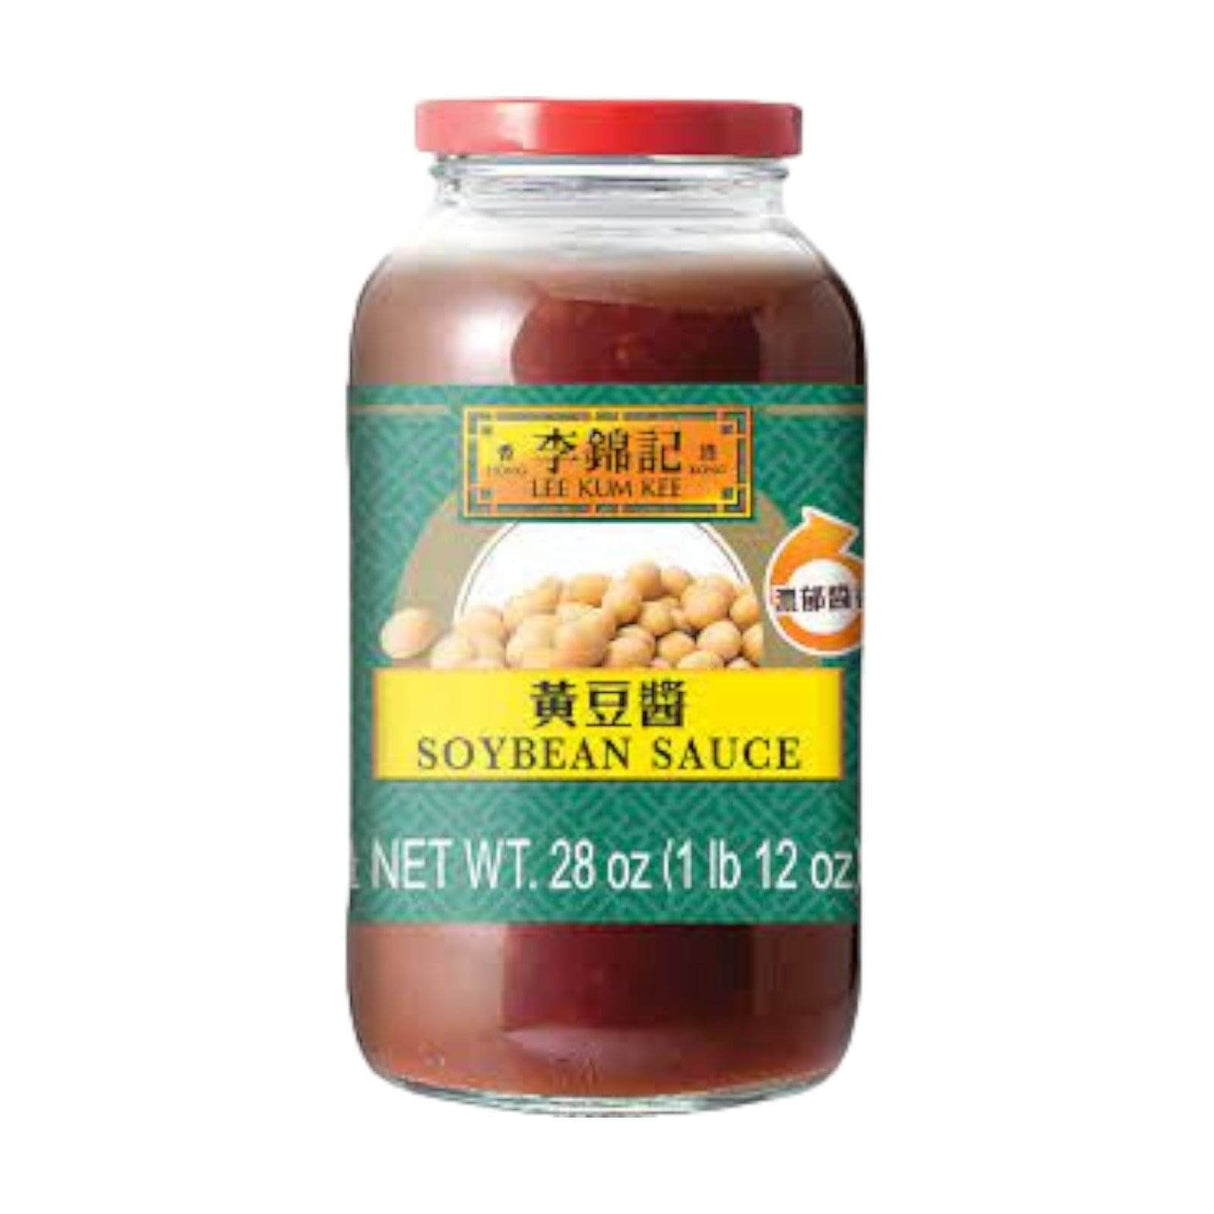 Lee Kum Kee Soybean Sauce